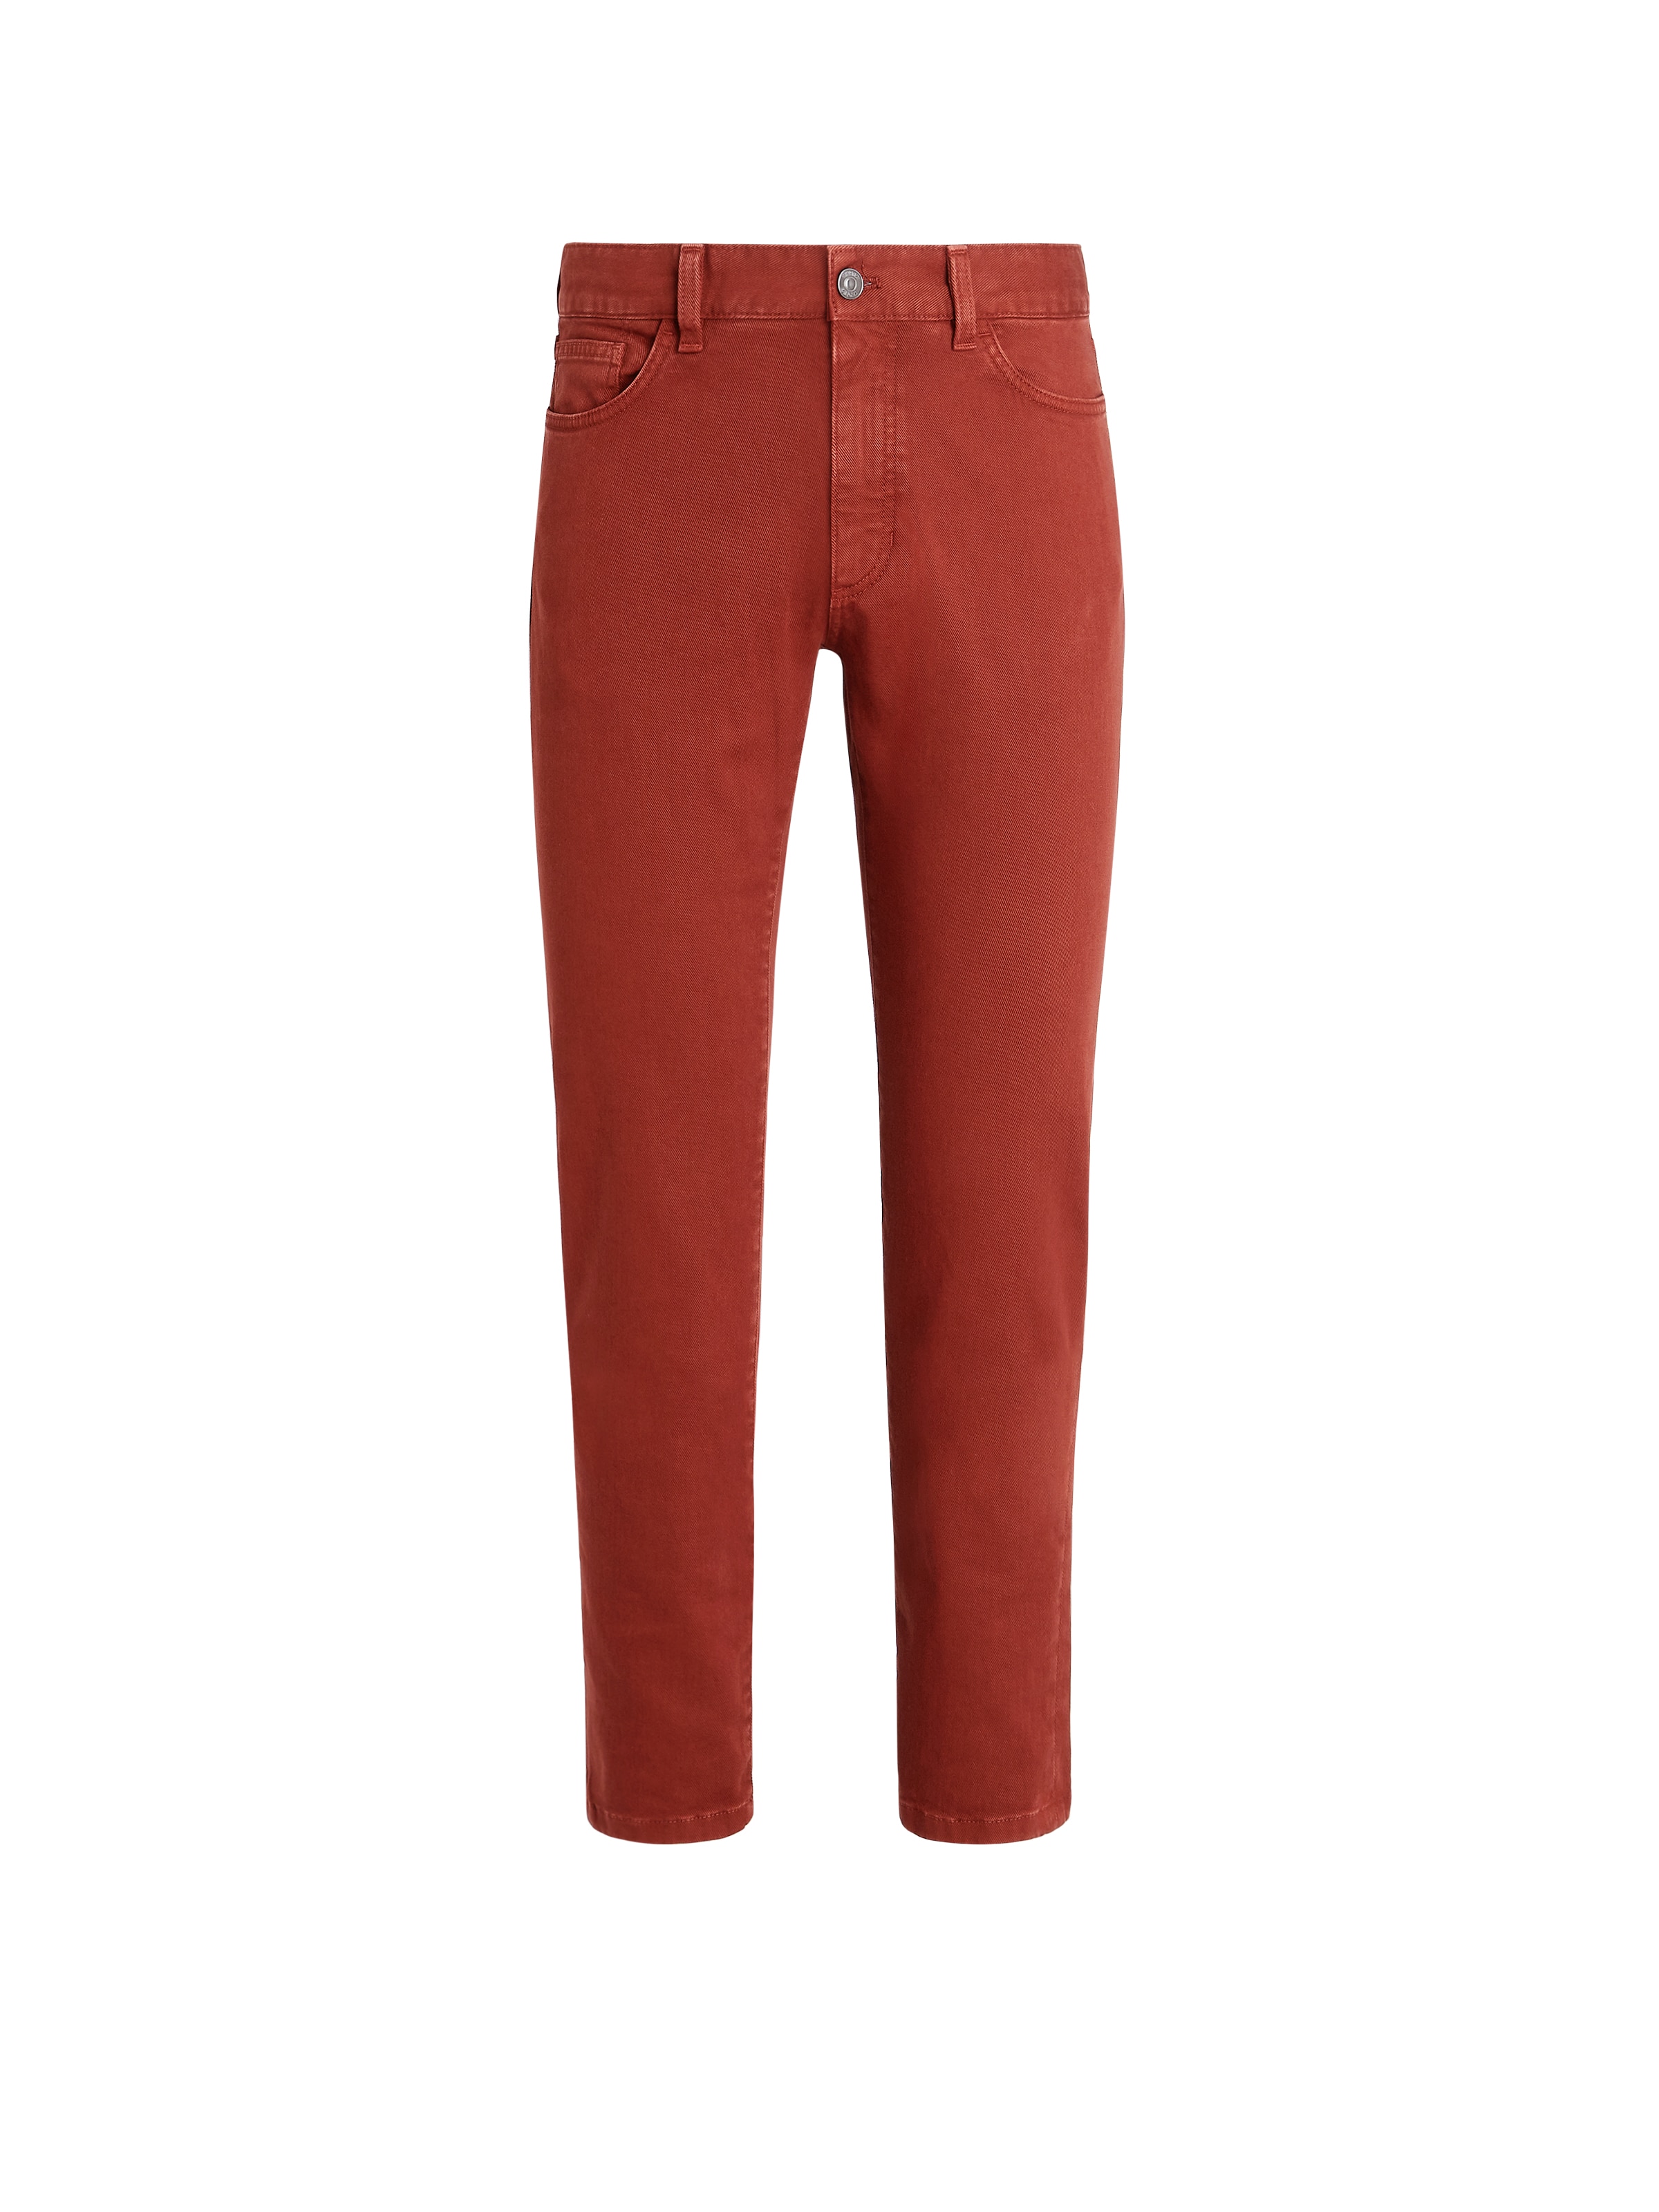 Zegna Dark Red Stretch Cotton Roccia Pants